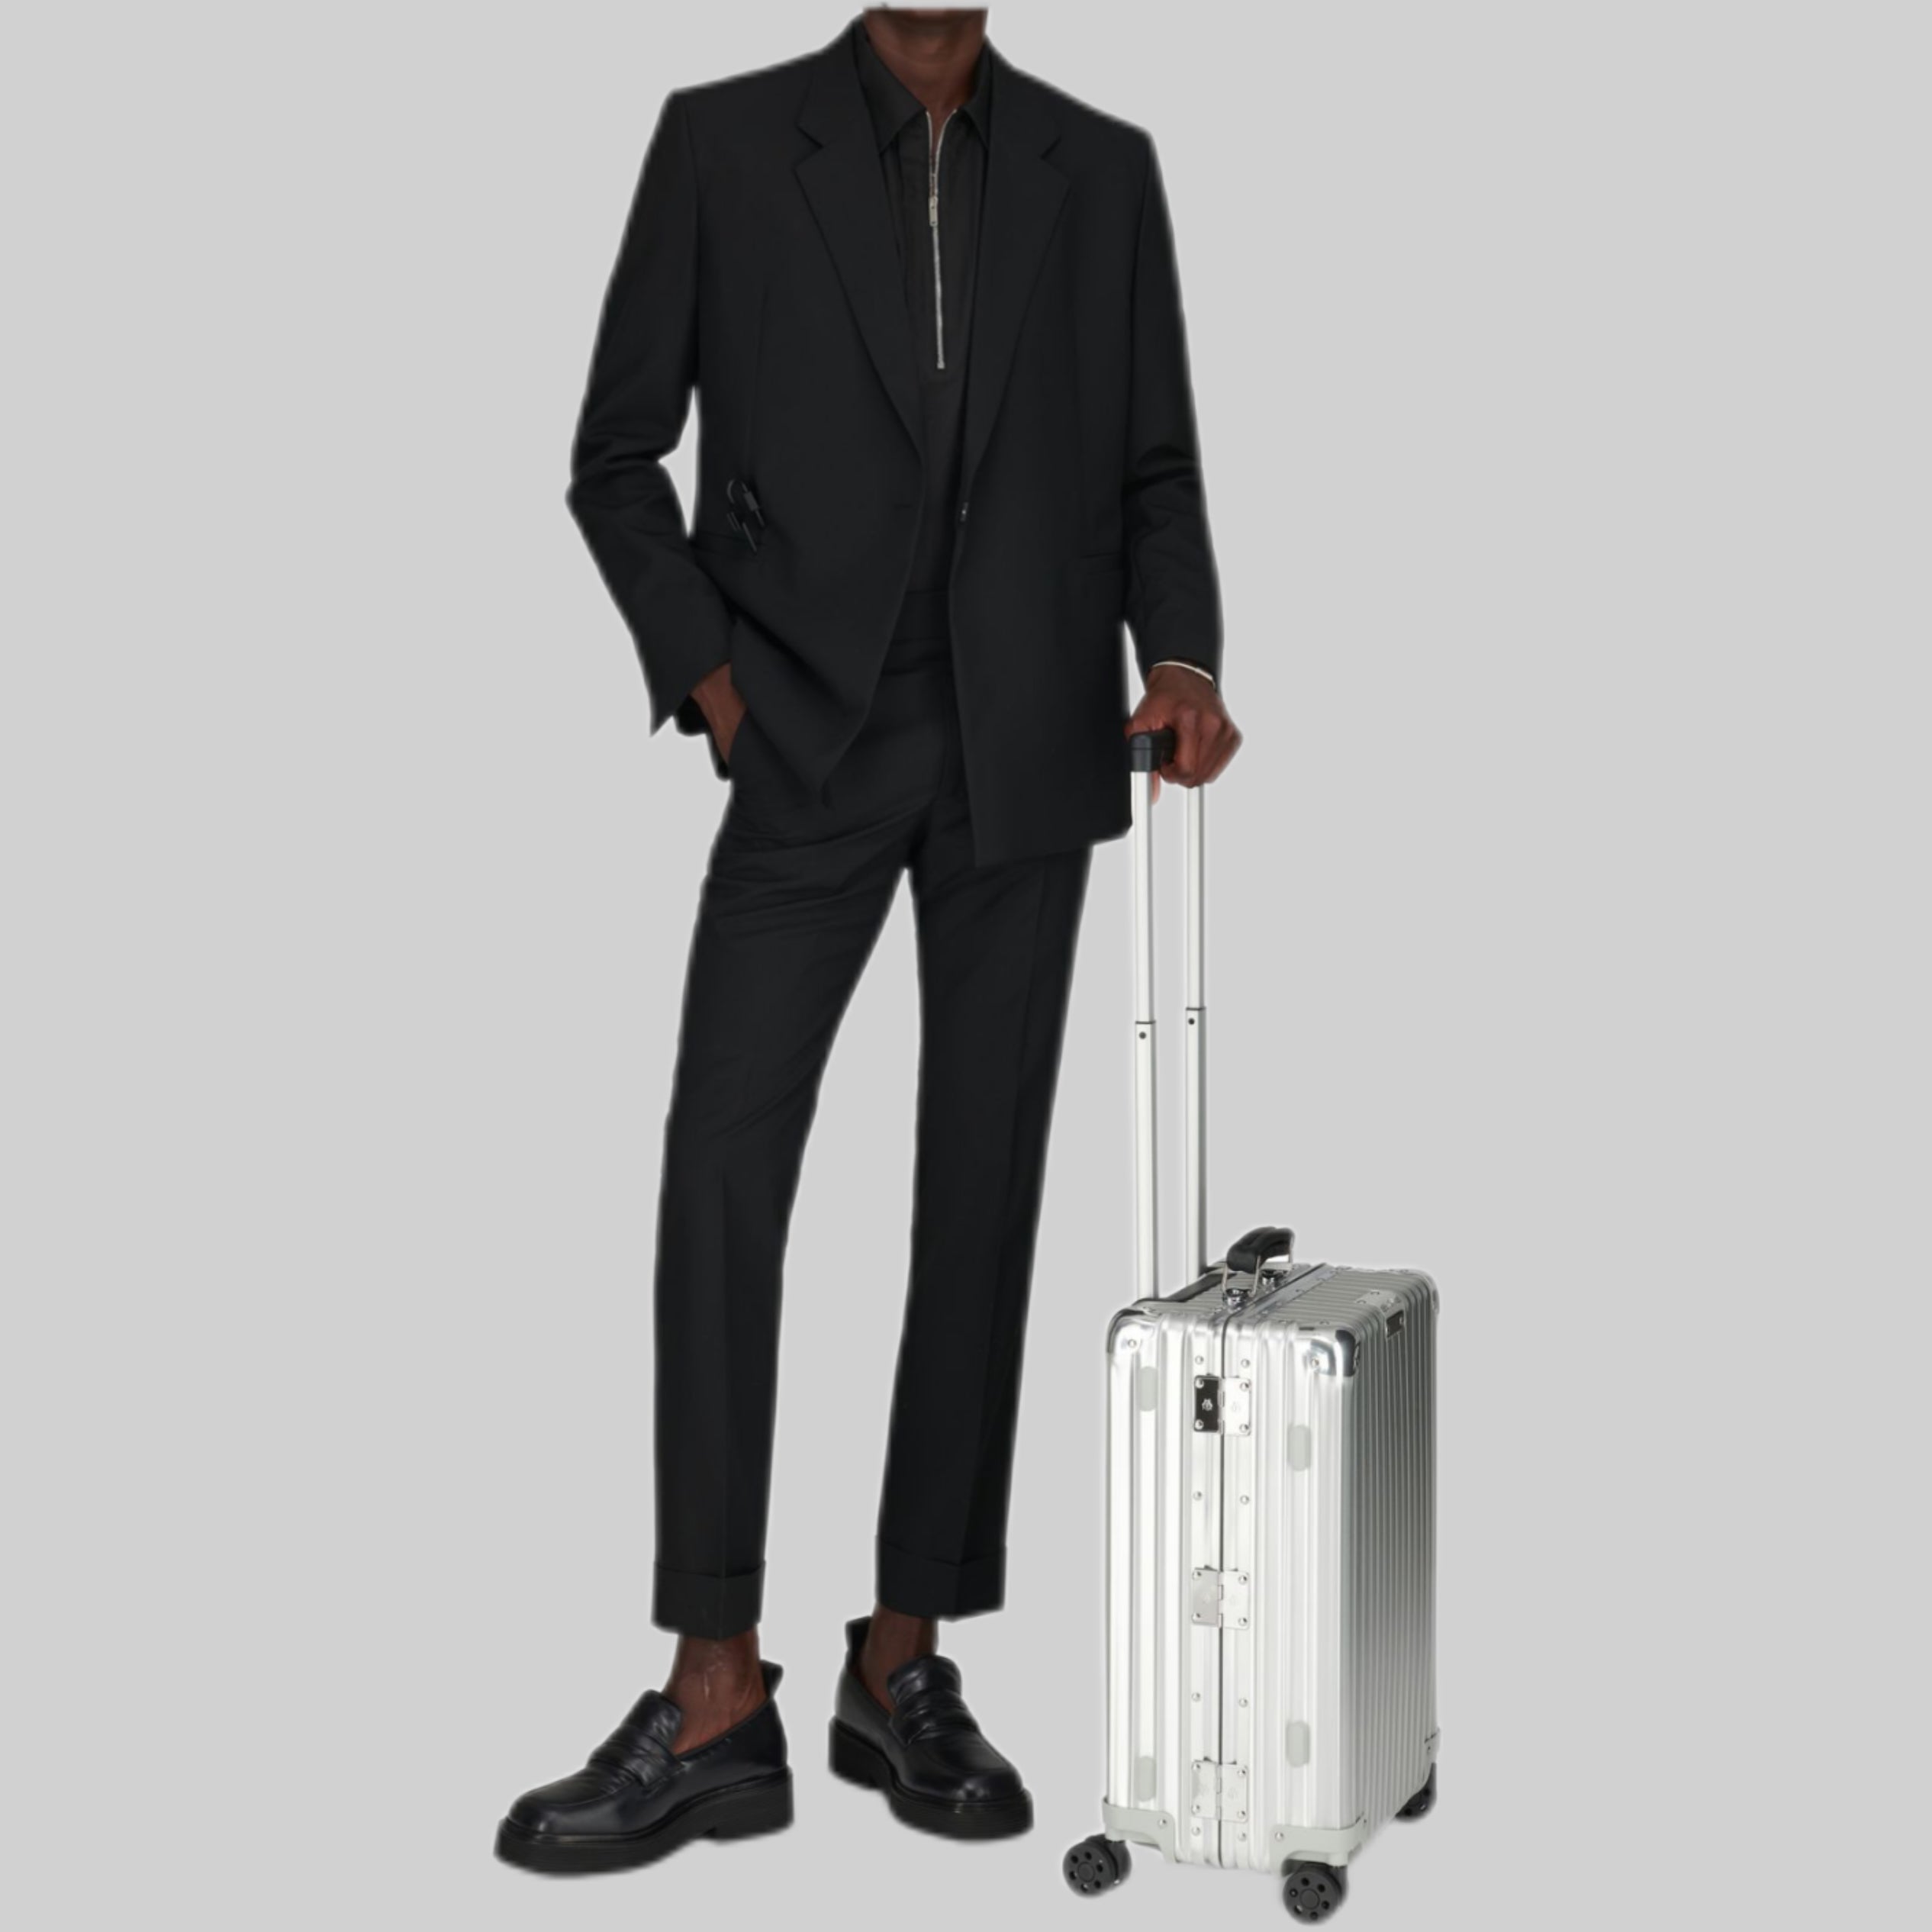 RIMOWA suitcase, silver, frontside, model